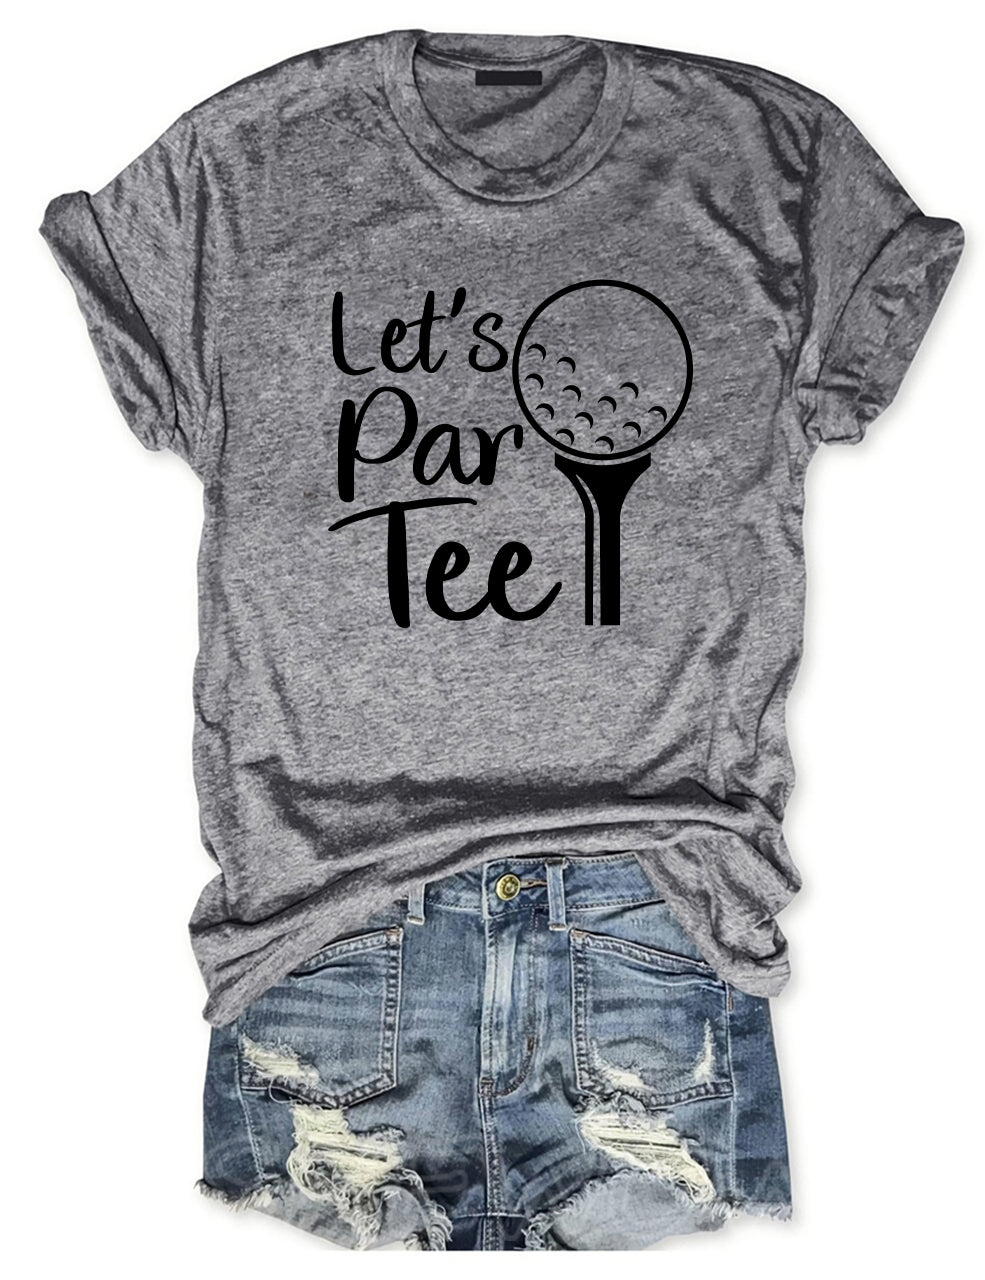 Let's Par Tee Golf T-shirt